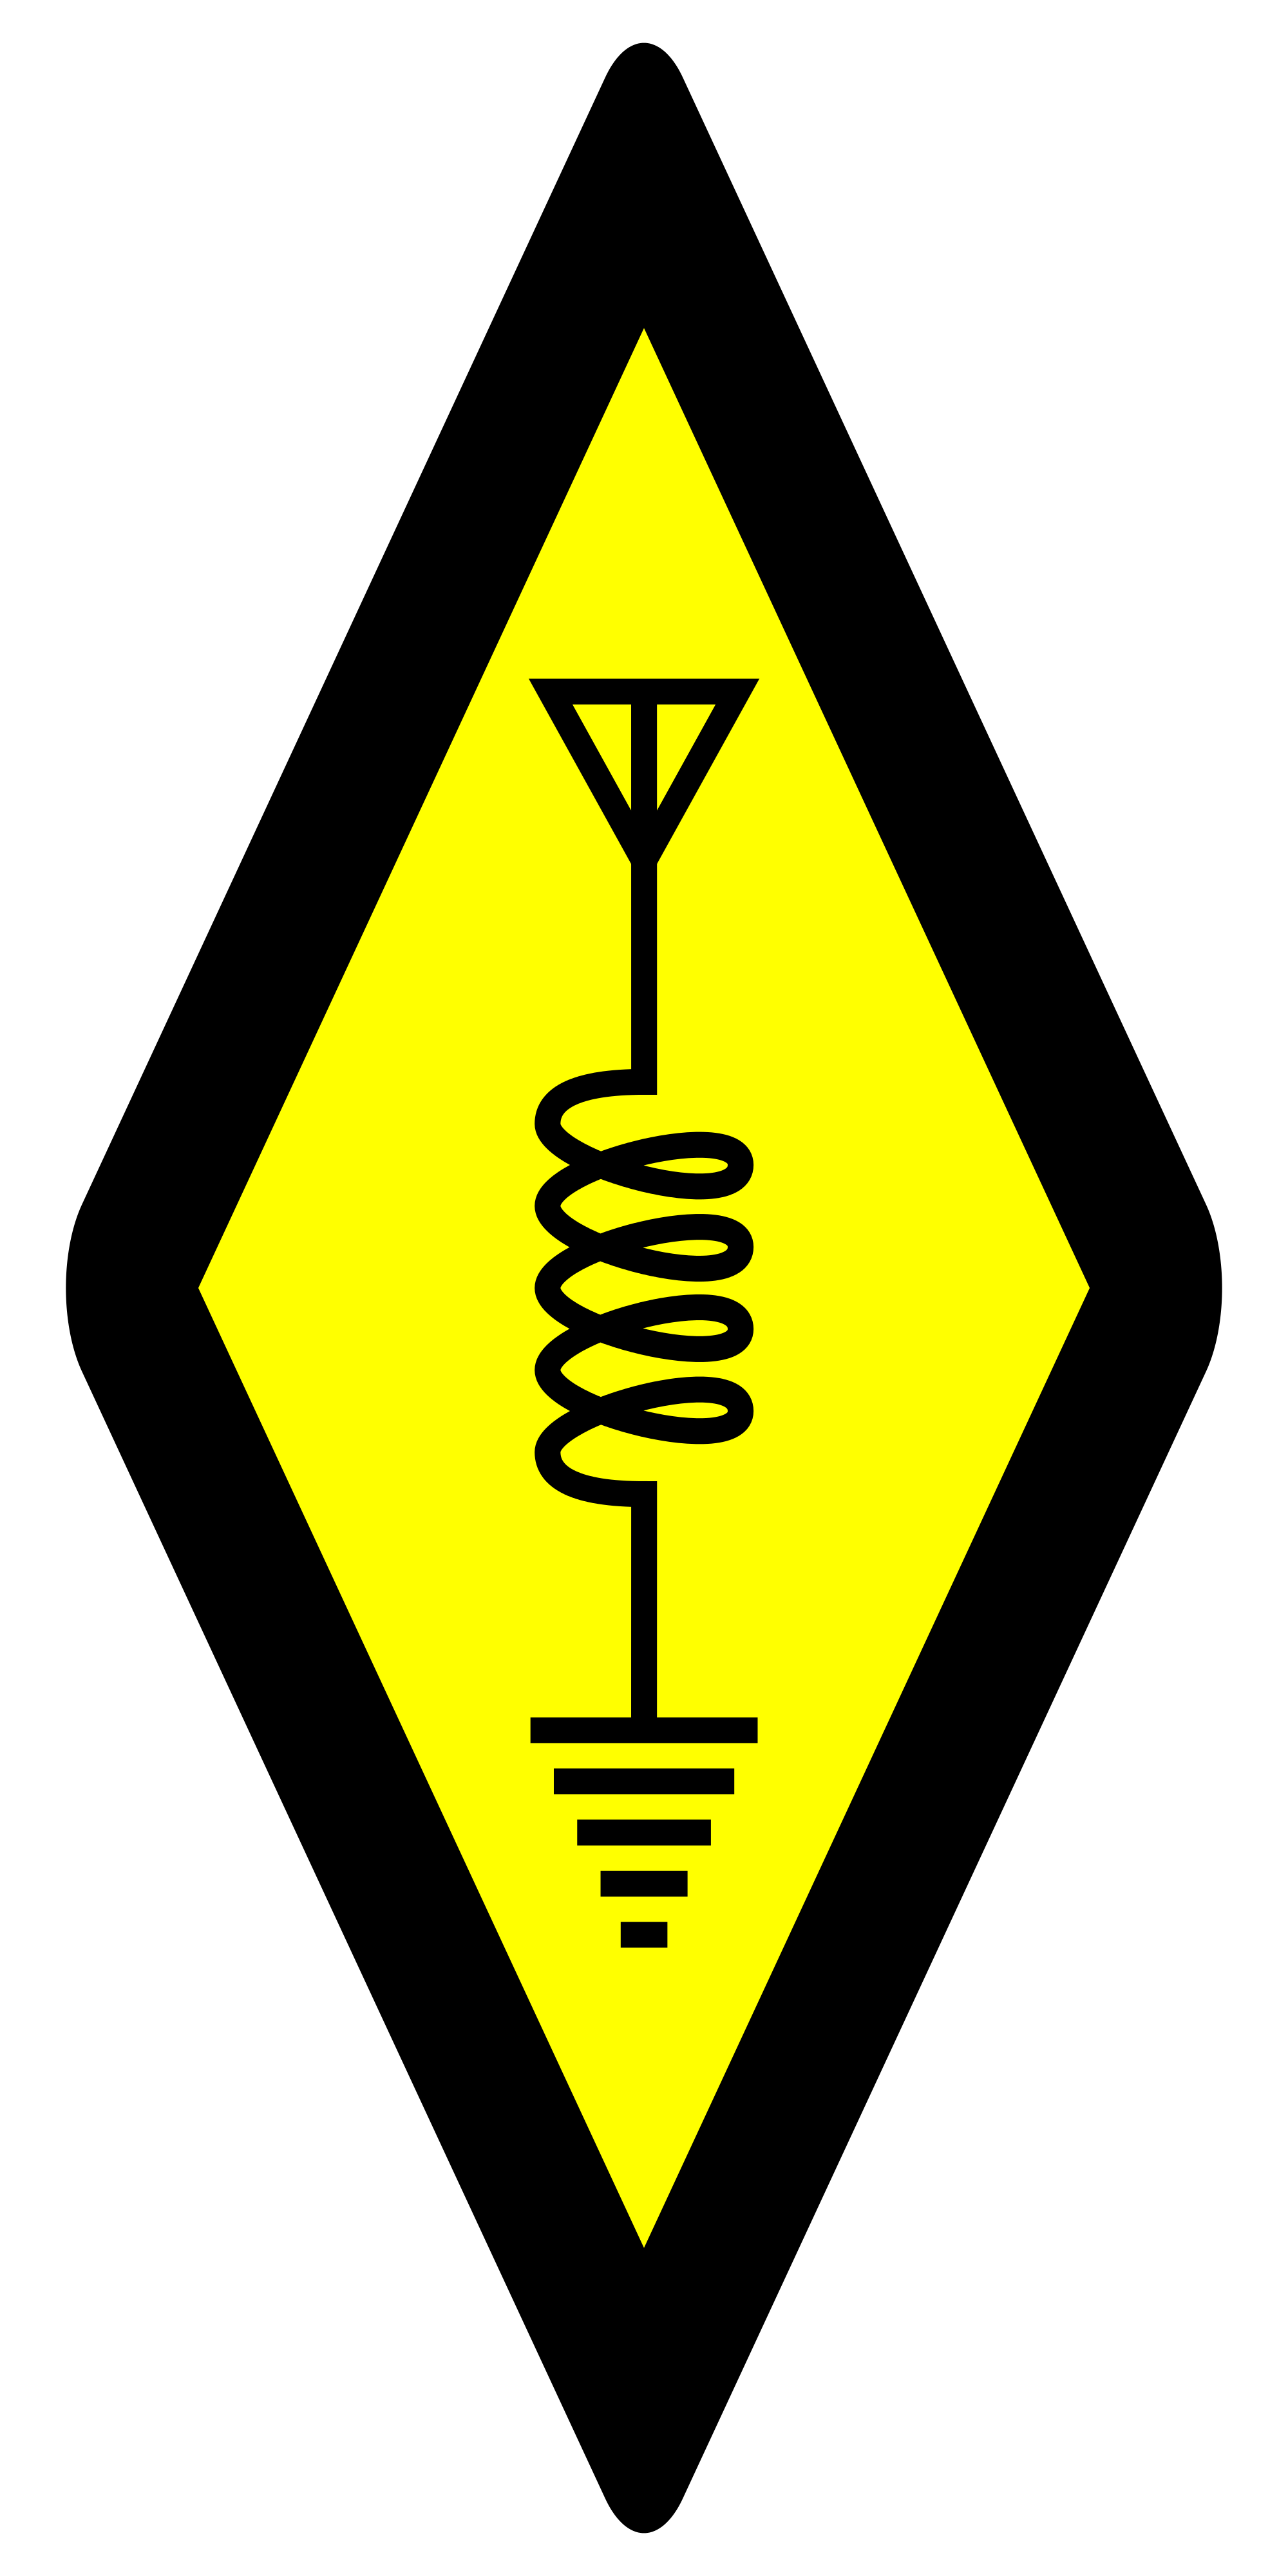 File:International amateur radio symbol.svg